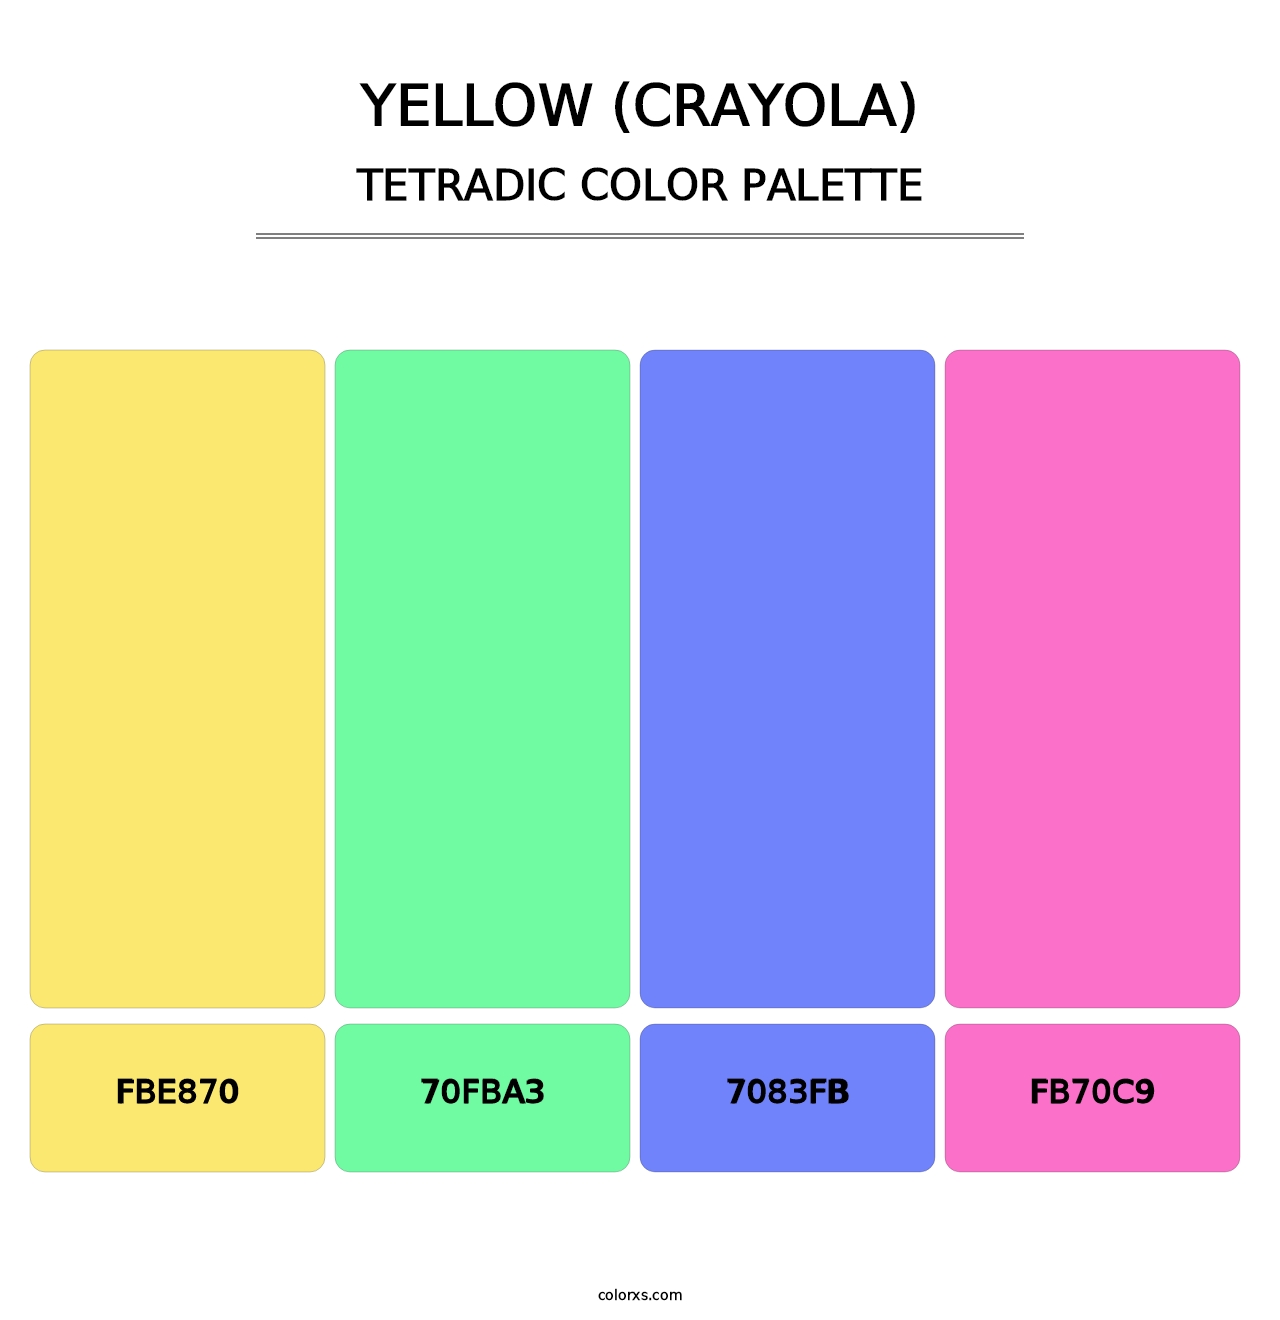 Yellow (Crayola) - Tetradic Color Palette